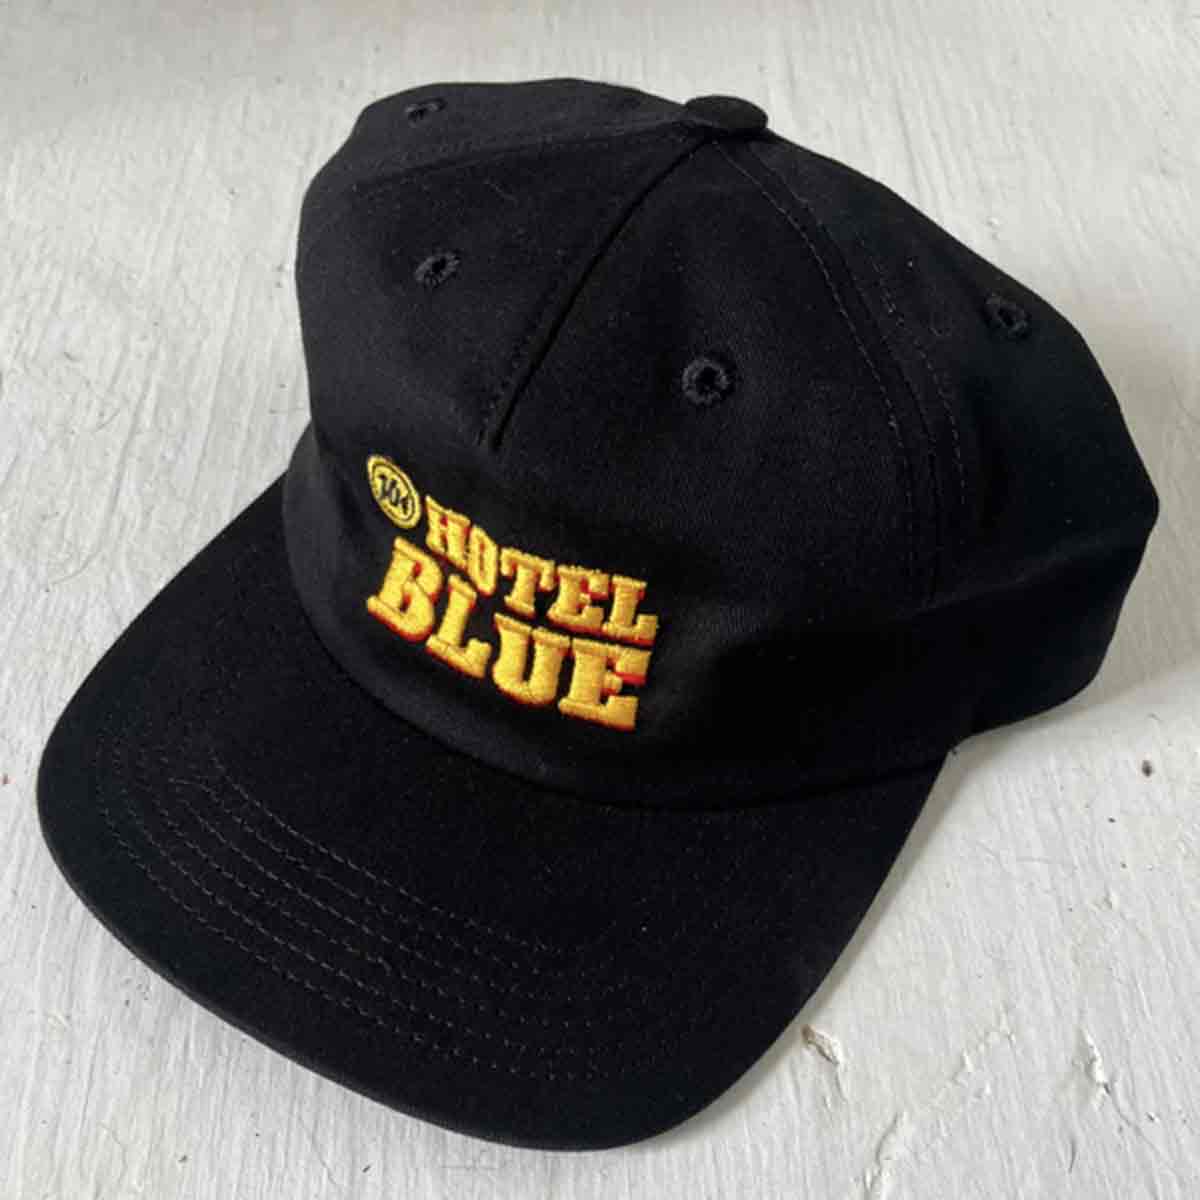 Hotel Blue - 10 Cent Hat